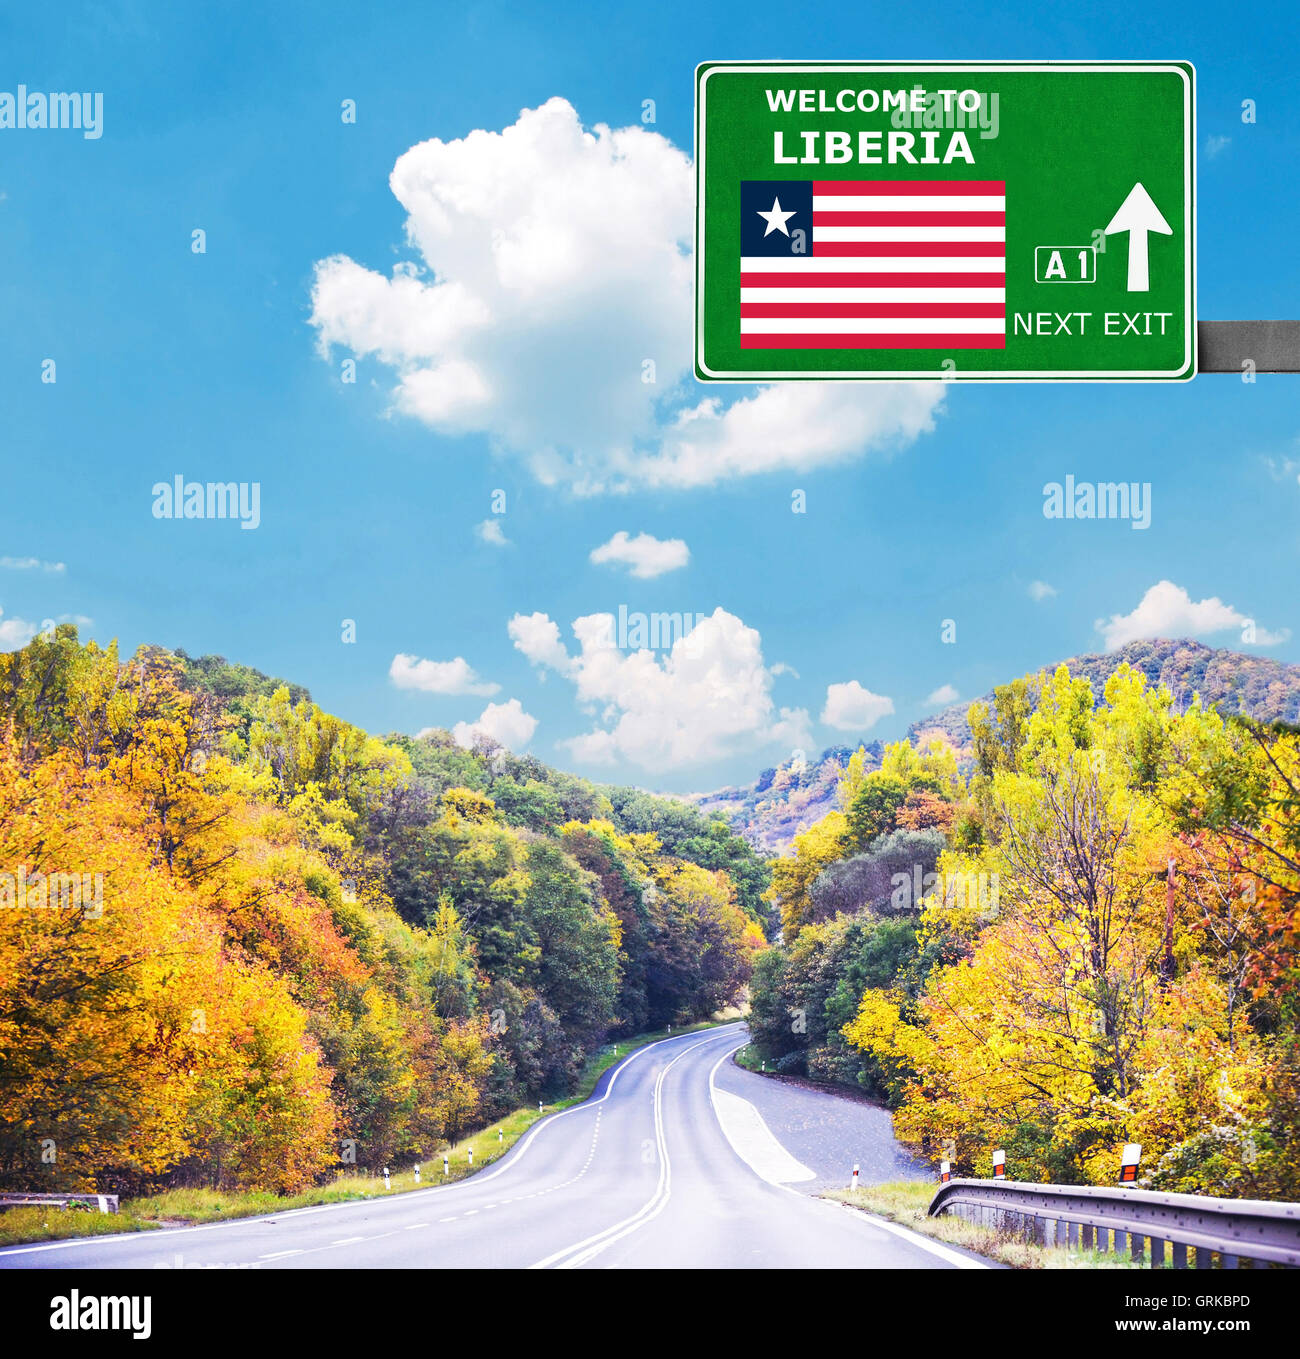 Liberia-Schild gegen klar blauen Himmel Stockfoto